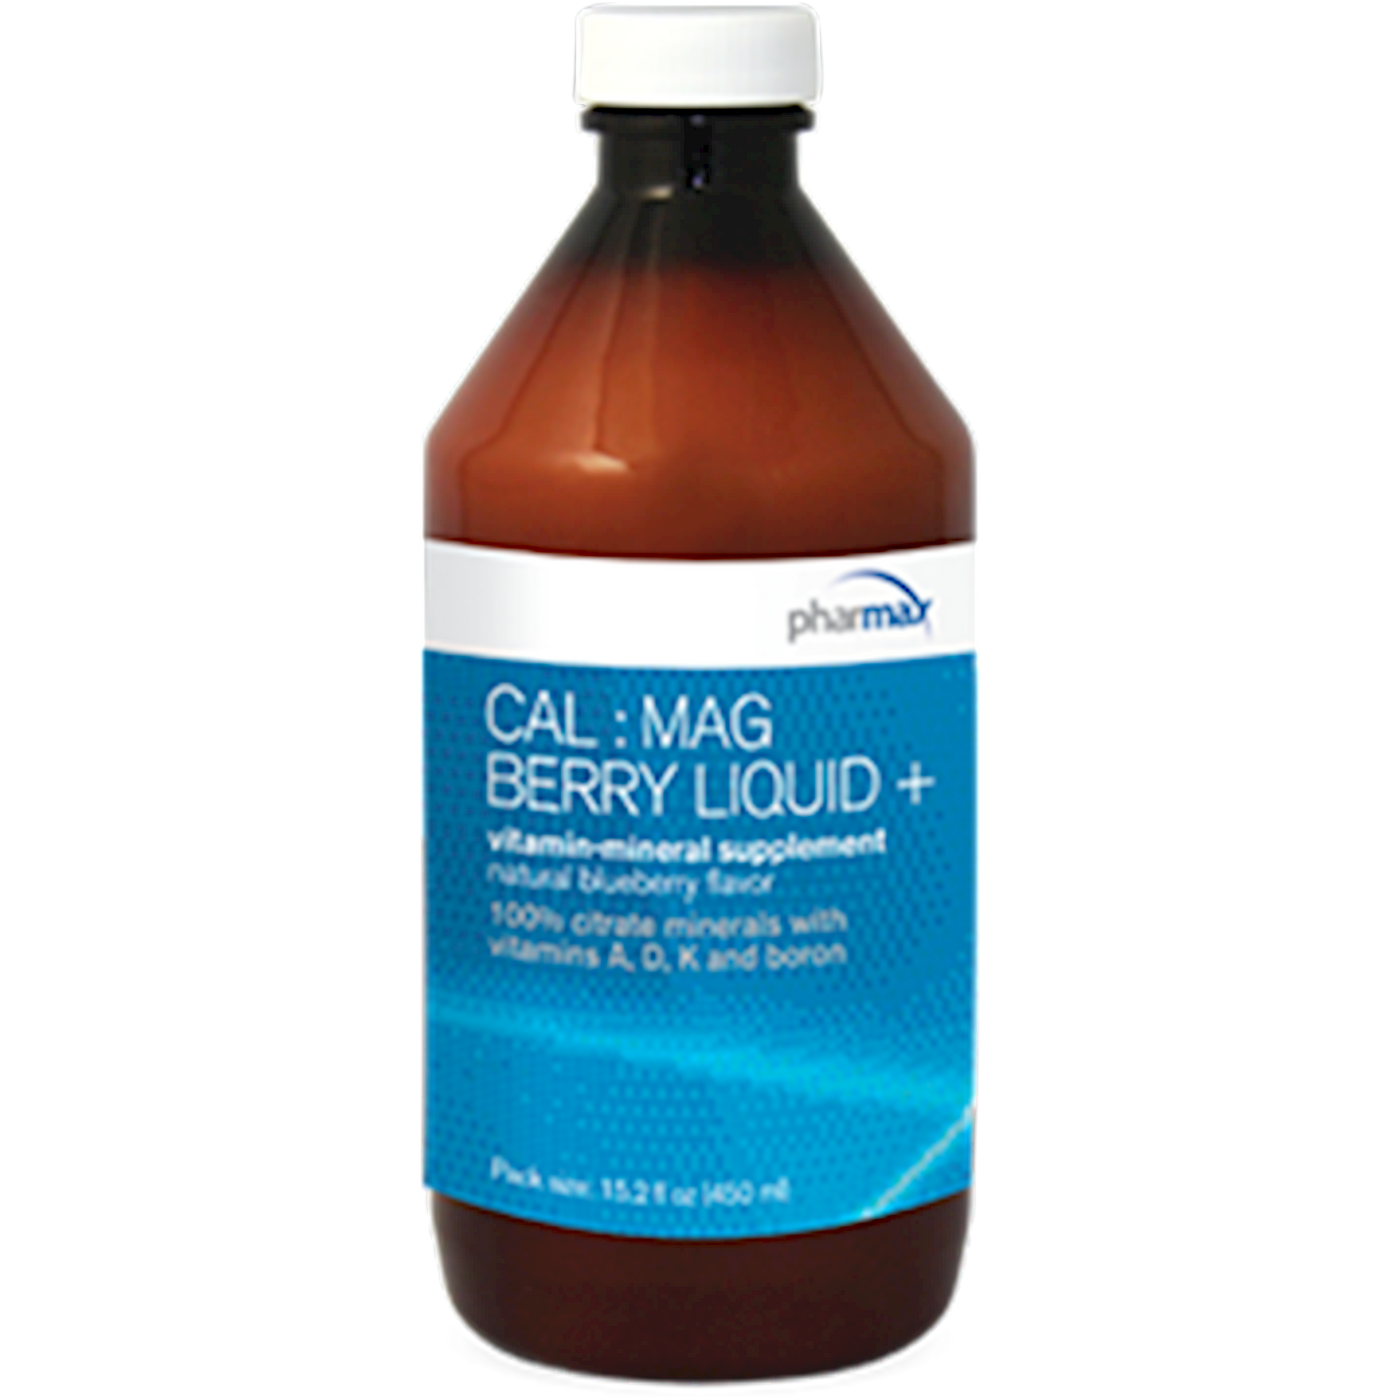 Cal : Mag Berry Liquid + 15.2 fl oz Curated Wellness